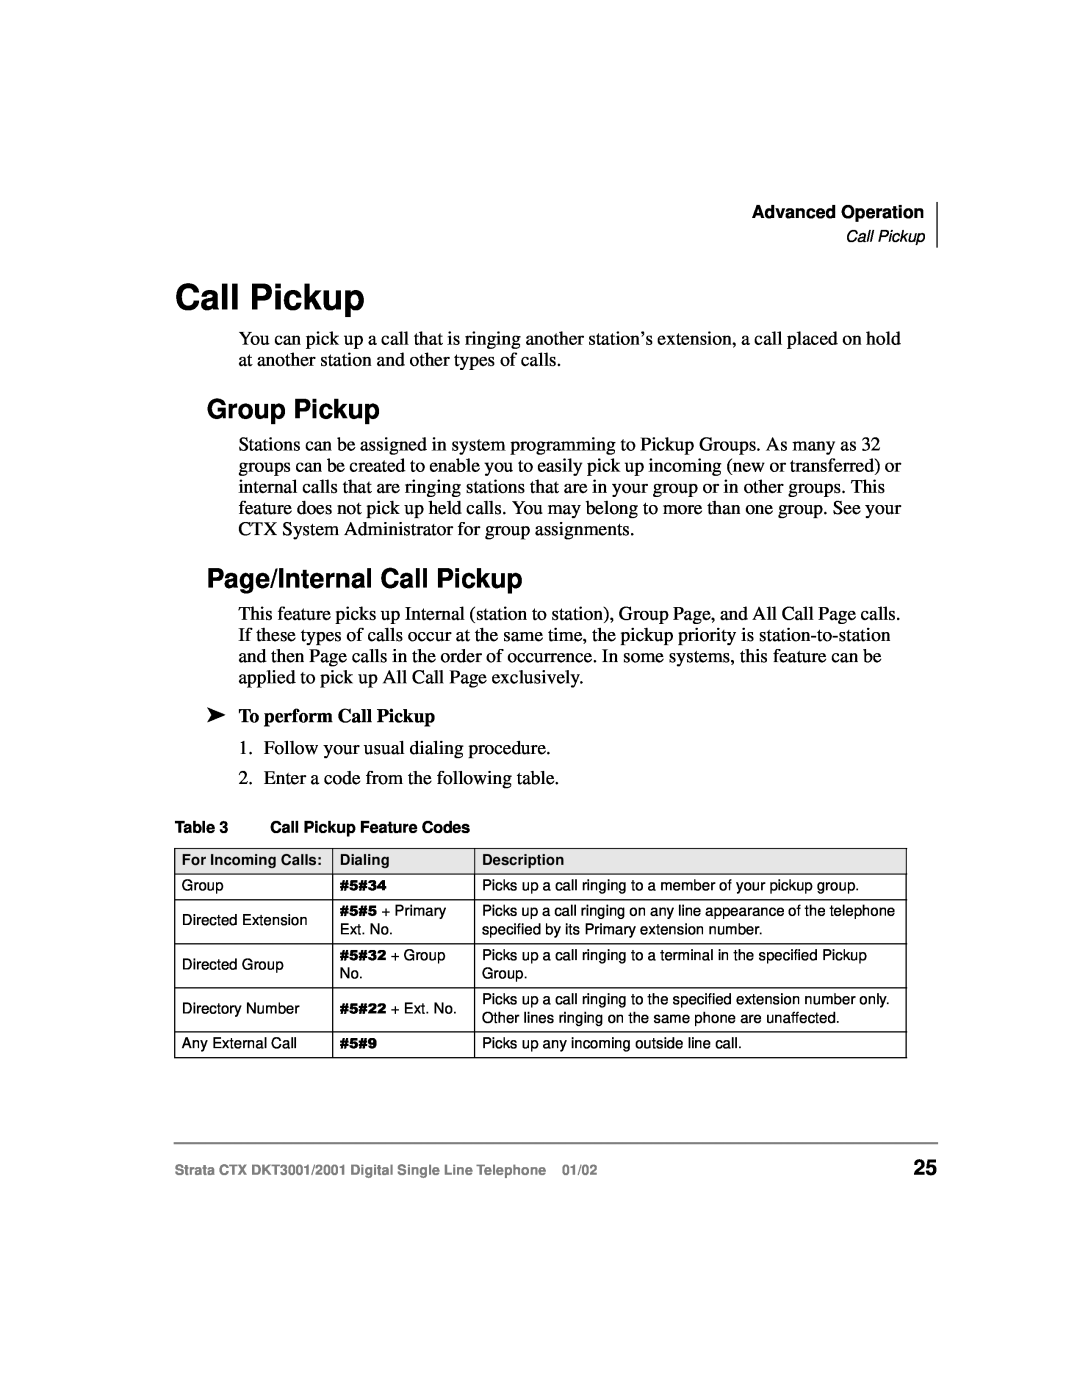 Toshiba 2001, DXT3001 manual Group Pickup, Page/Internal Call Pickup, To perform Call Pickup 